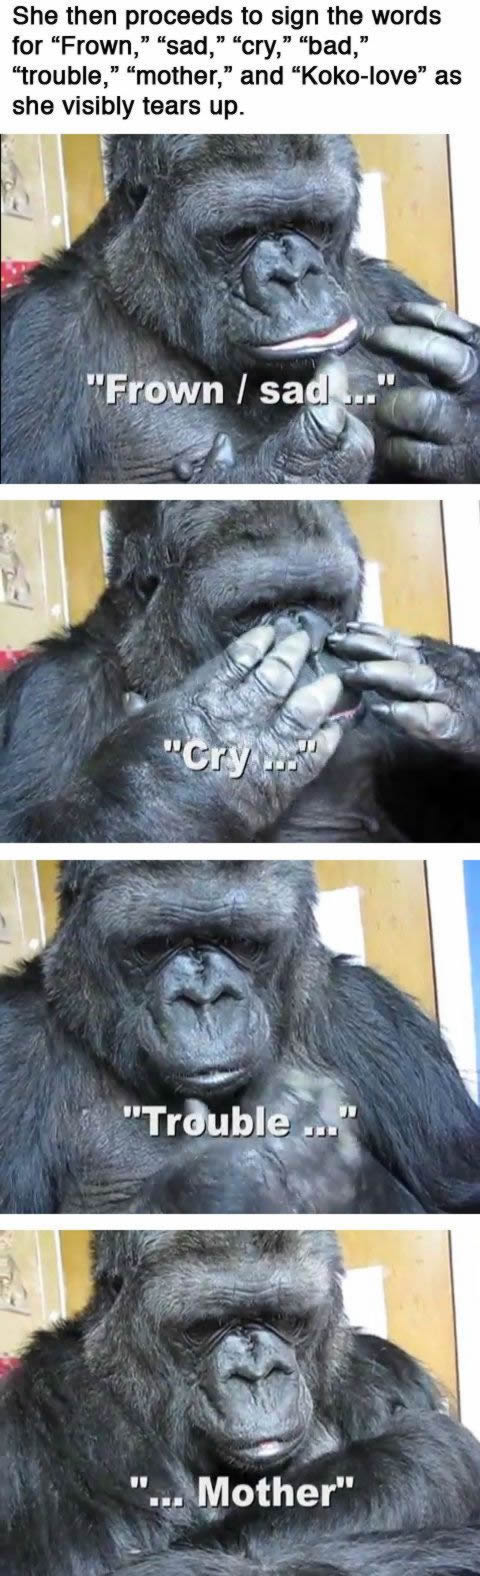 Koko, el gorila